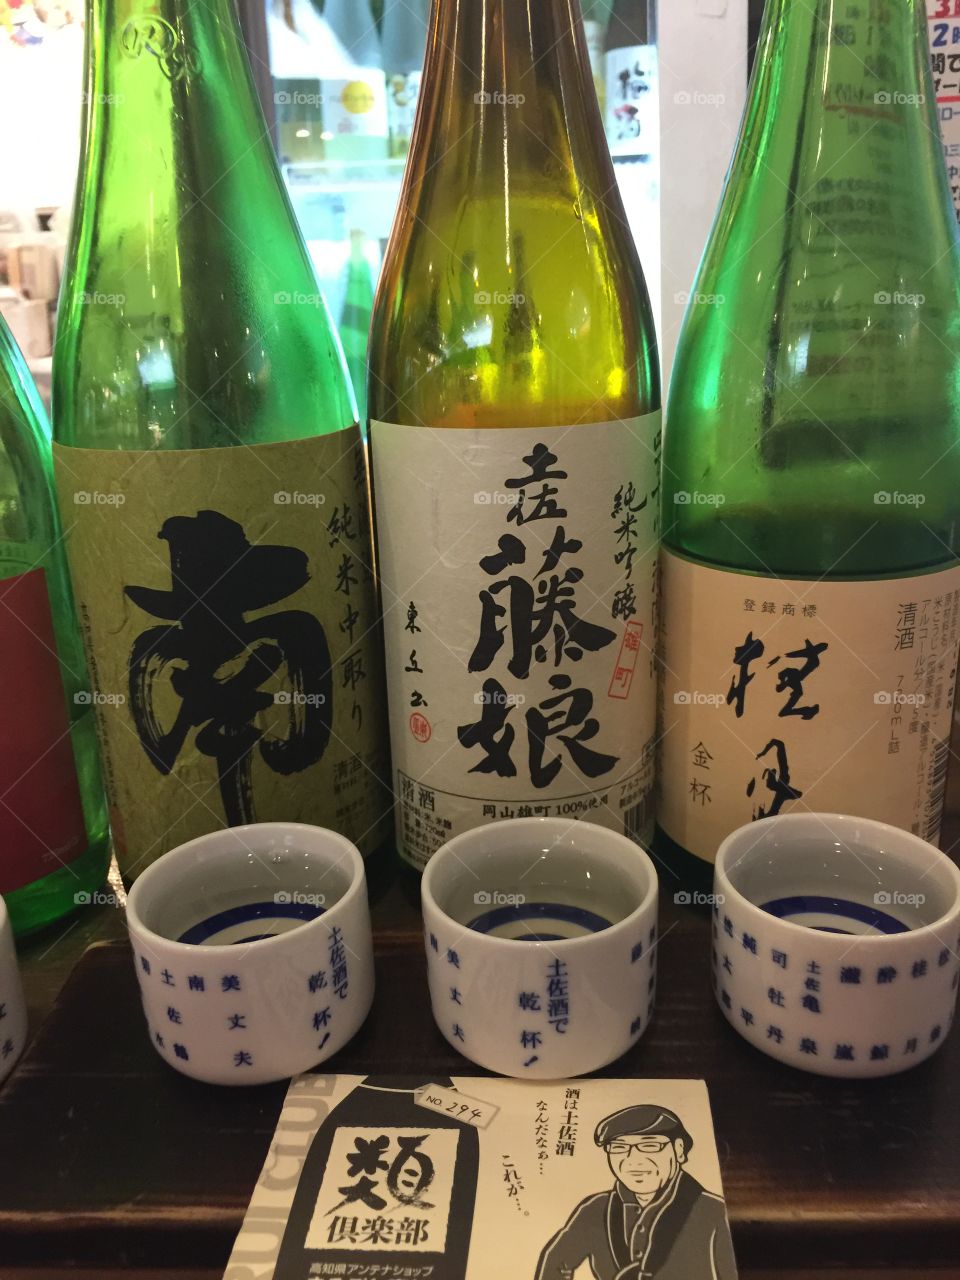 sake tasting set, Kouchi